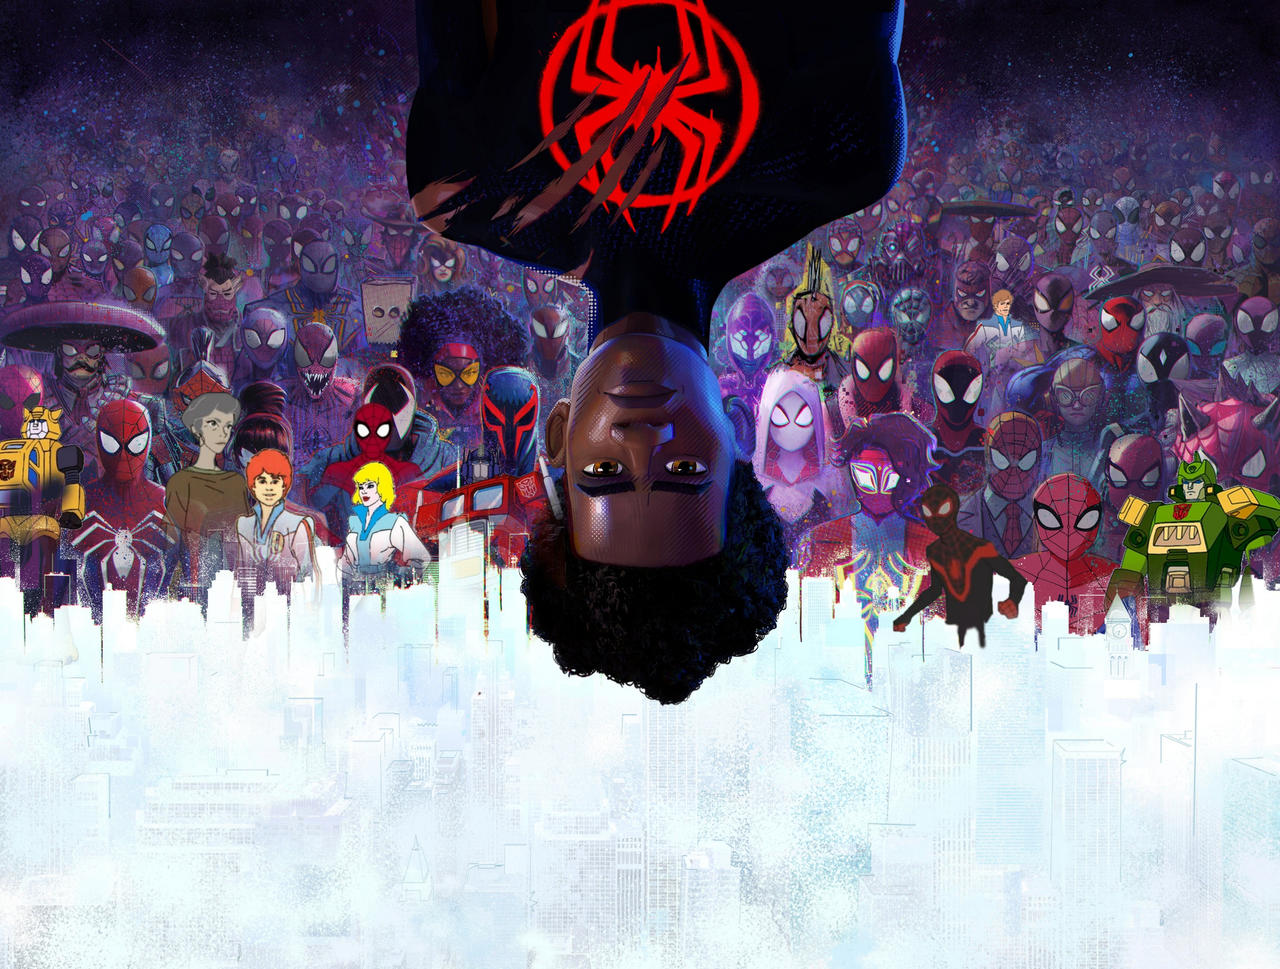 Spider Man Across The Spiderverse by GodzillaFanBlue2021 on DeviantArt